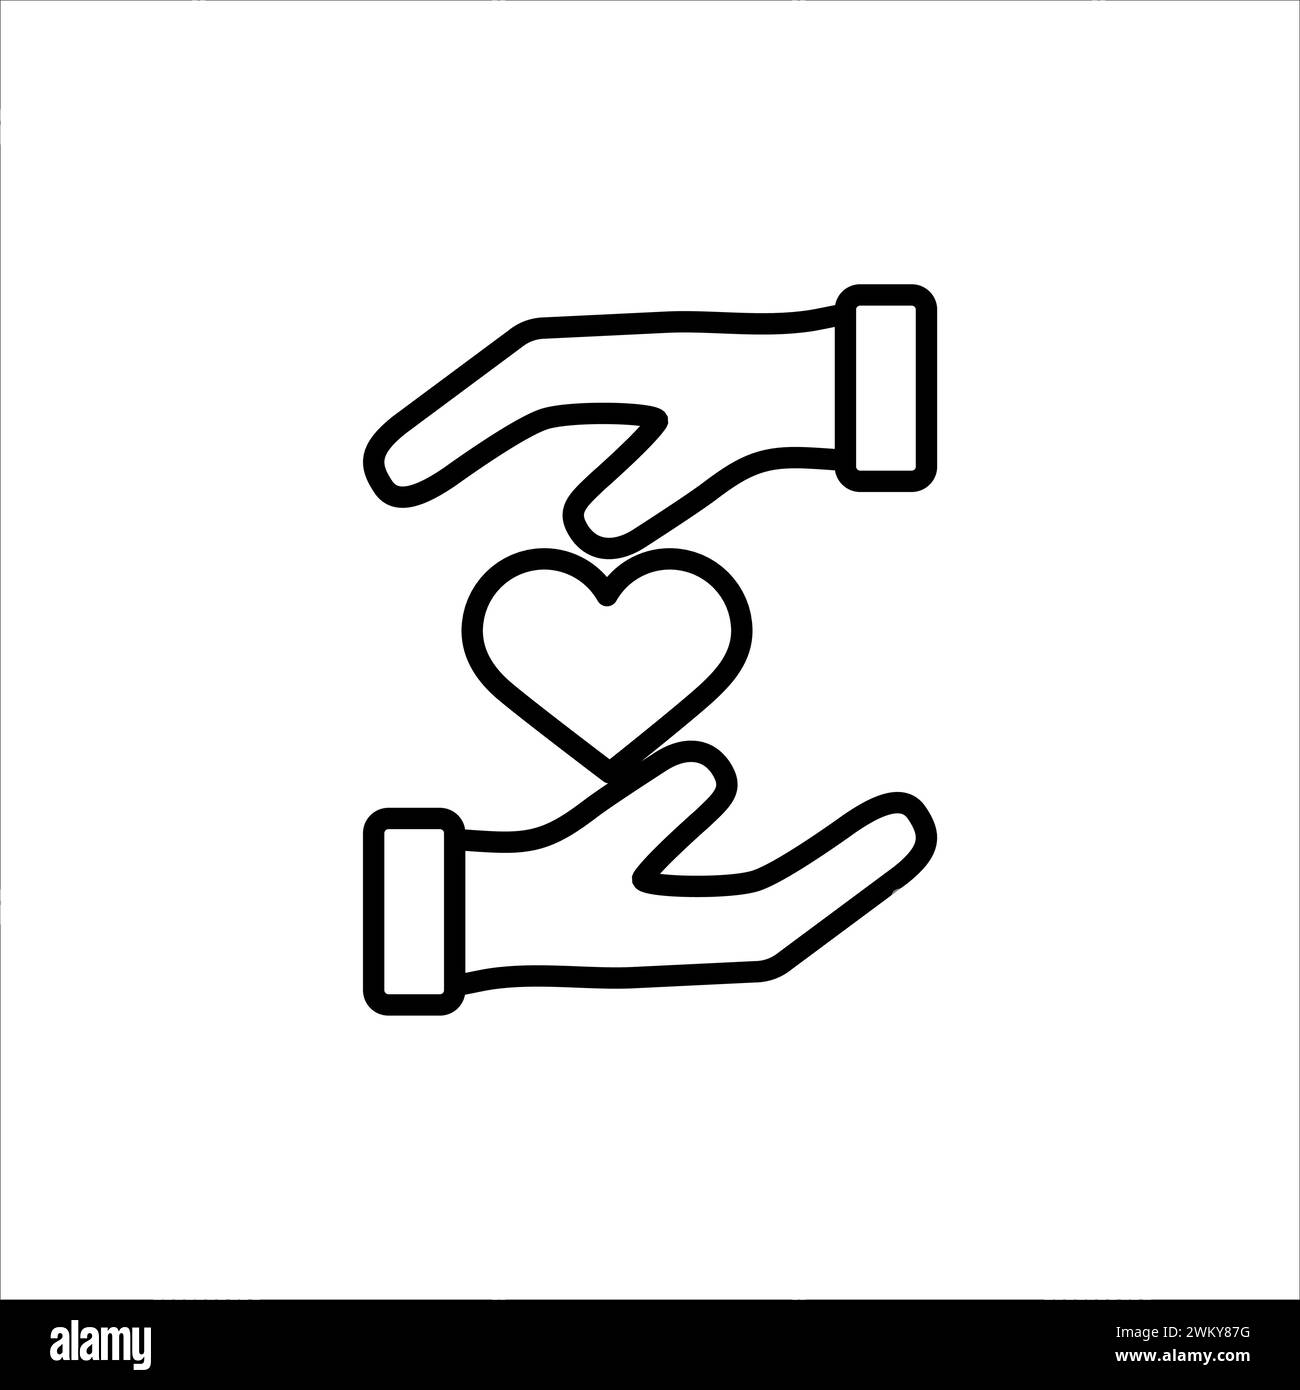 Art illustration icon logo charity and solidarity symbol love Stock Vector